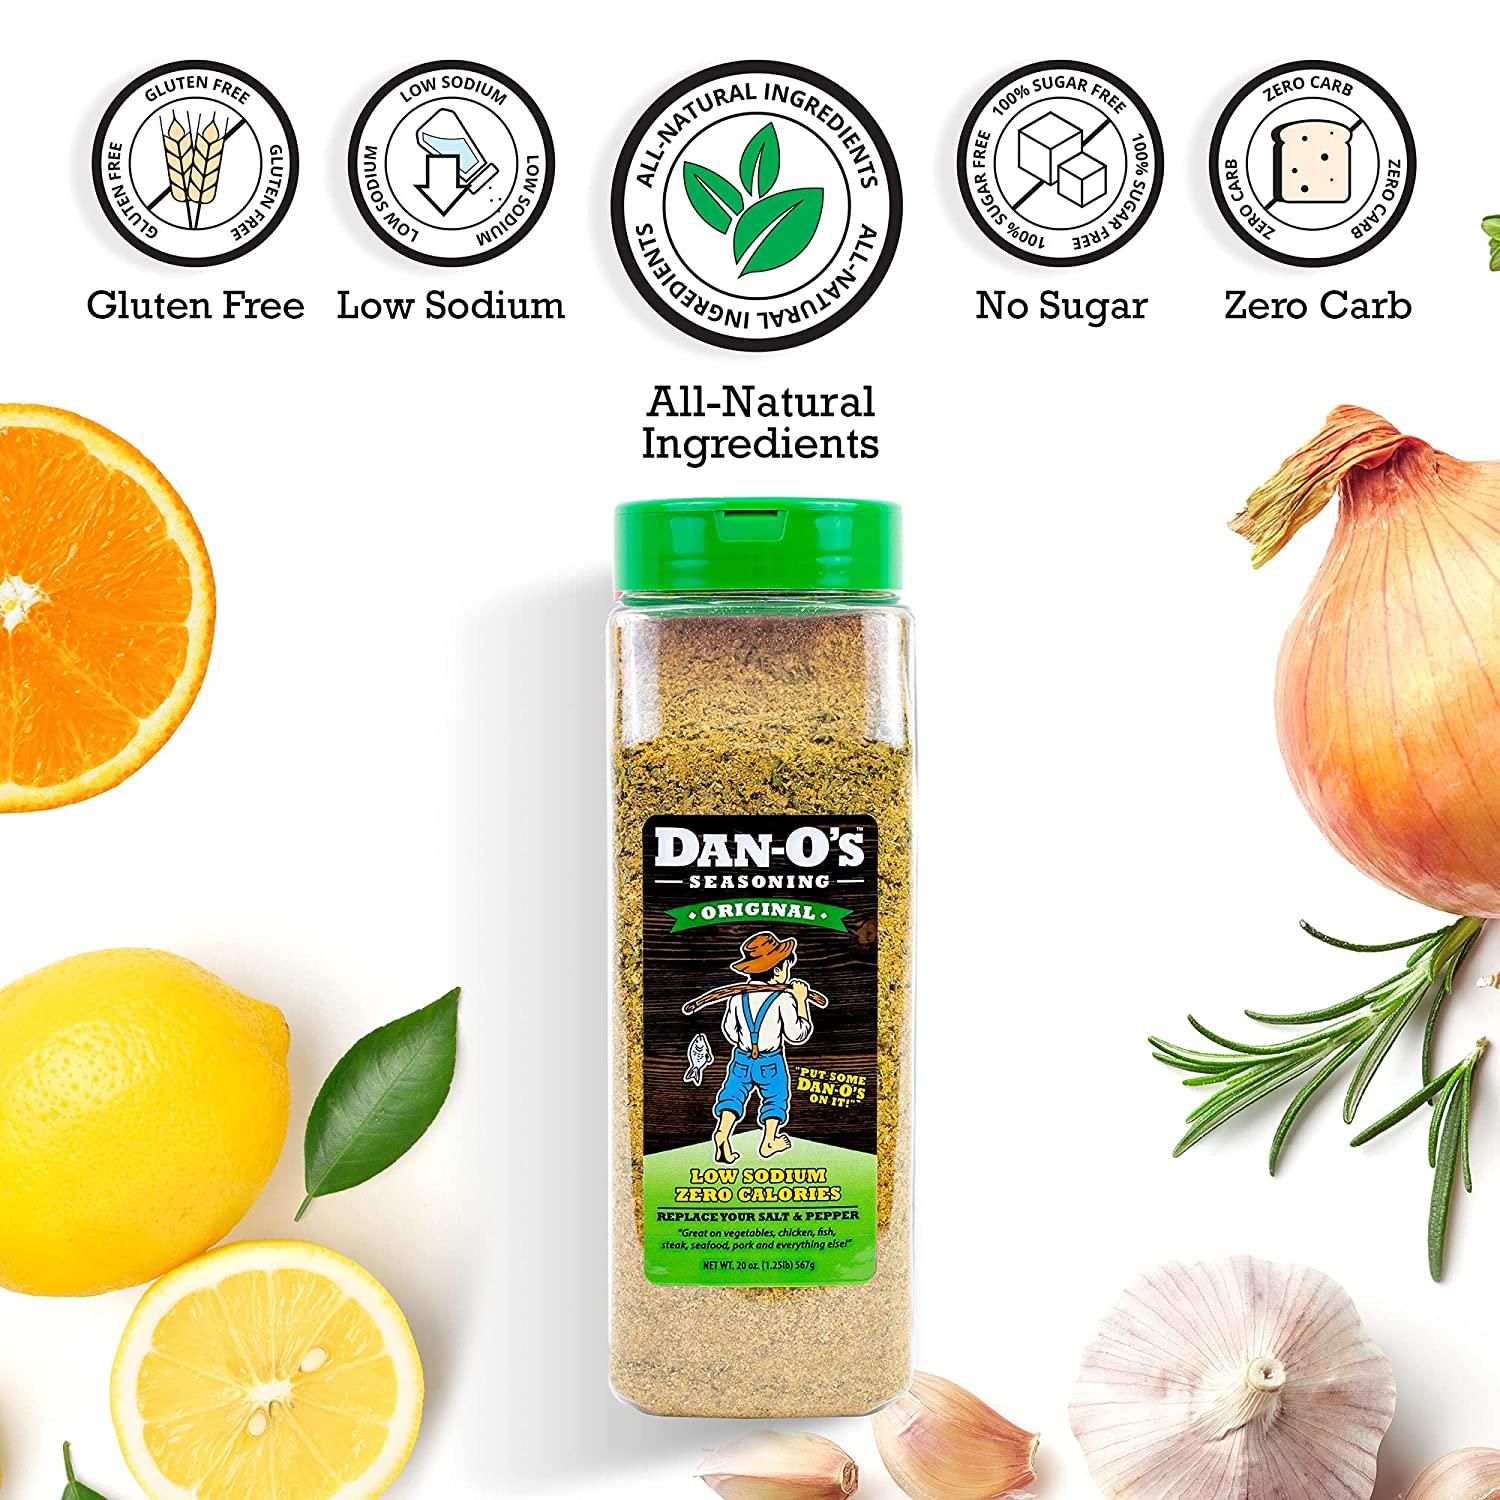 Dan-O's Original Seasoning Green Top Low Sodium No Sugar or MSG danos (3.5  oz)